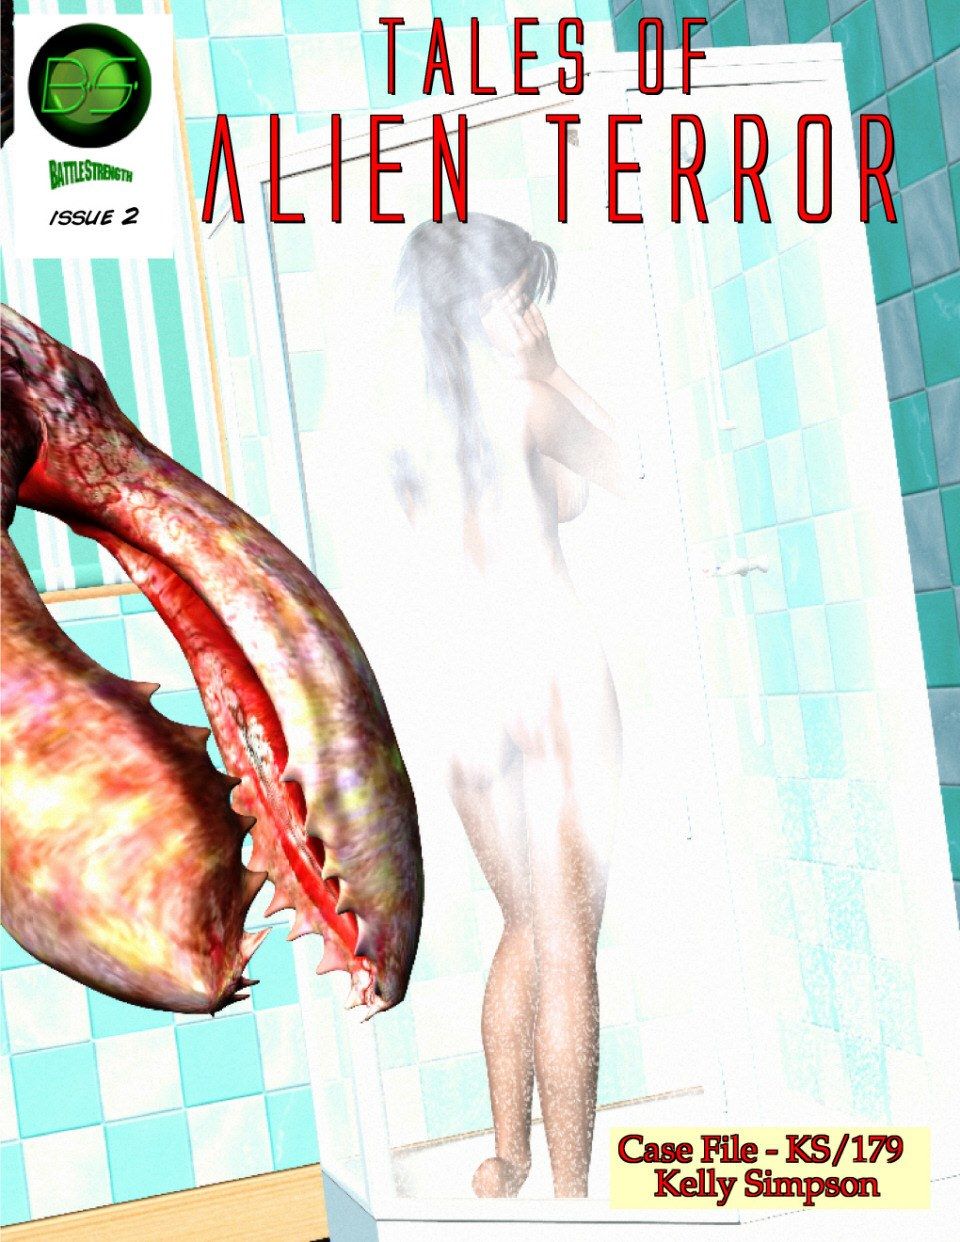 Tales of Alien Terror - Issue 2 - BattleStrength page 1